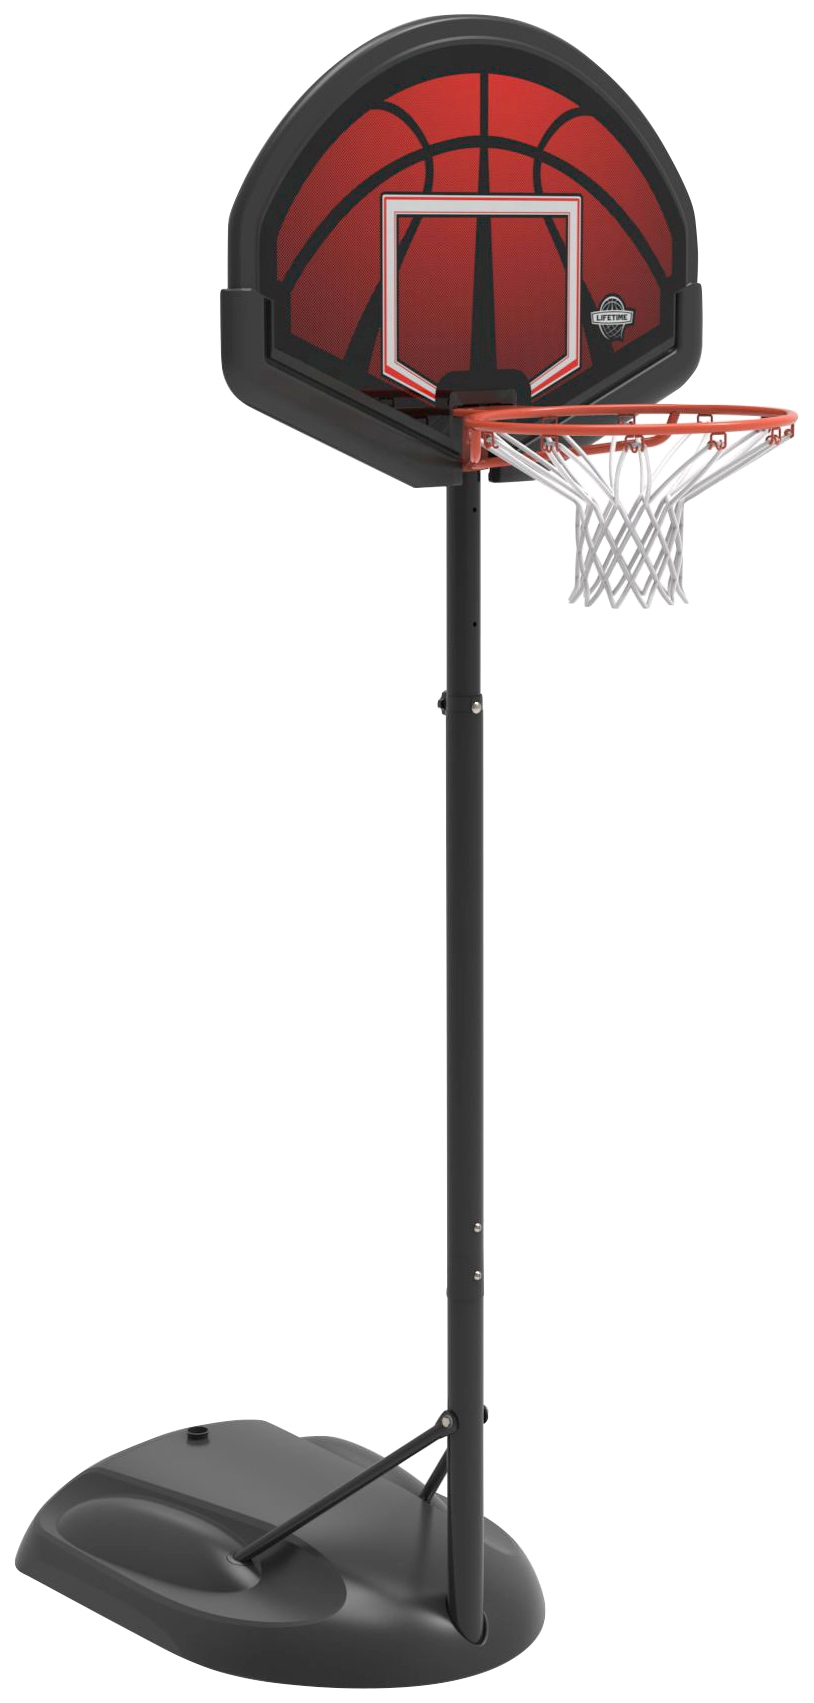 50NRTH Basketballkorb »Alabama«, höhenverstellbar schwarz/rot